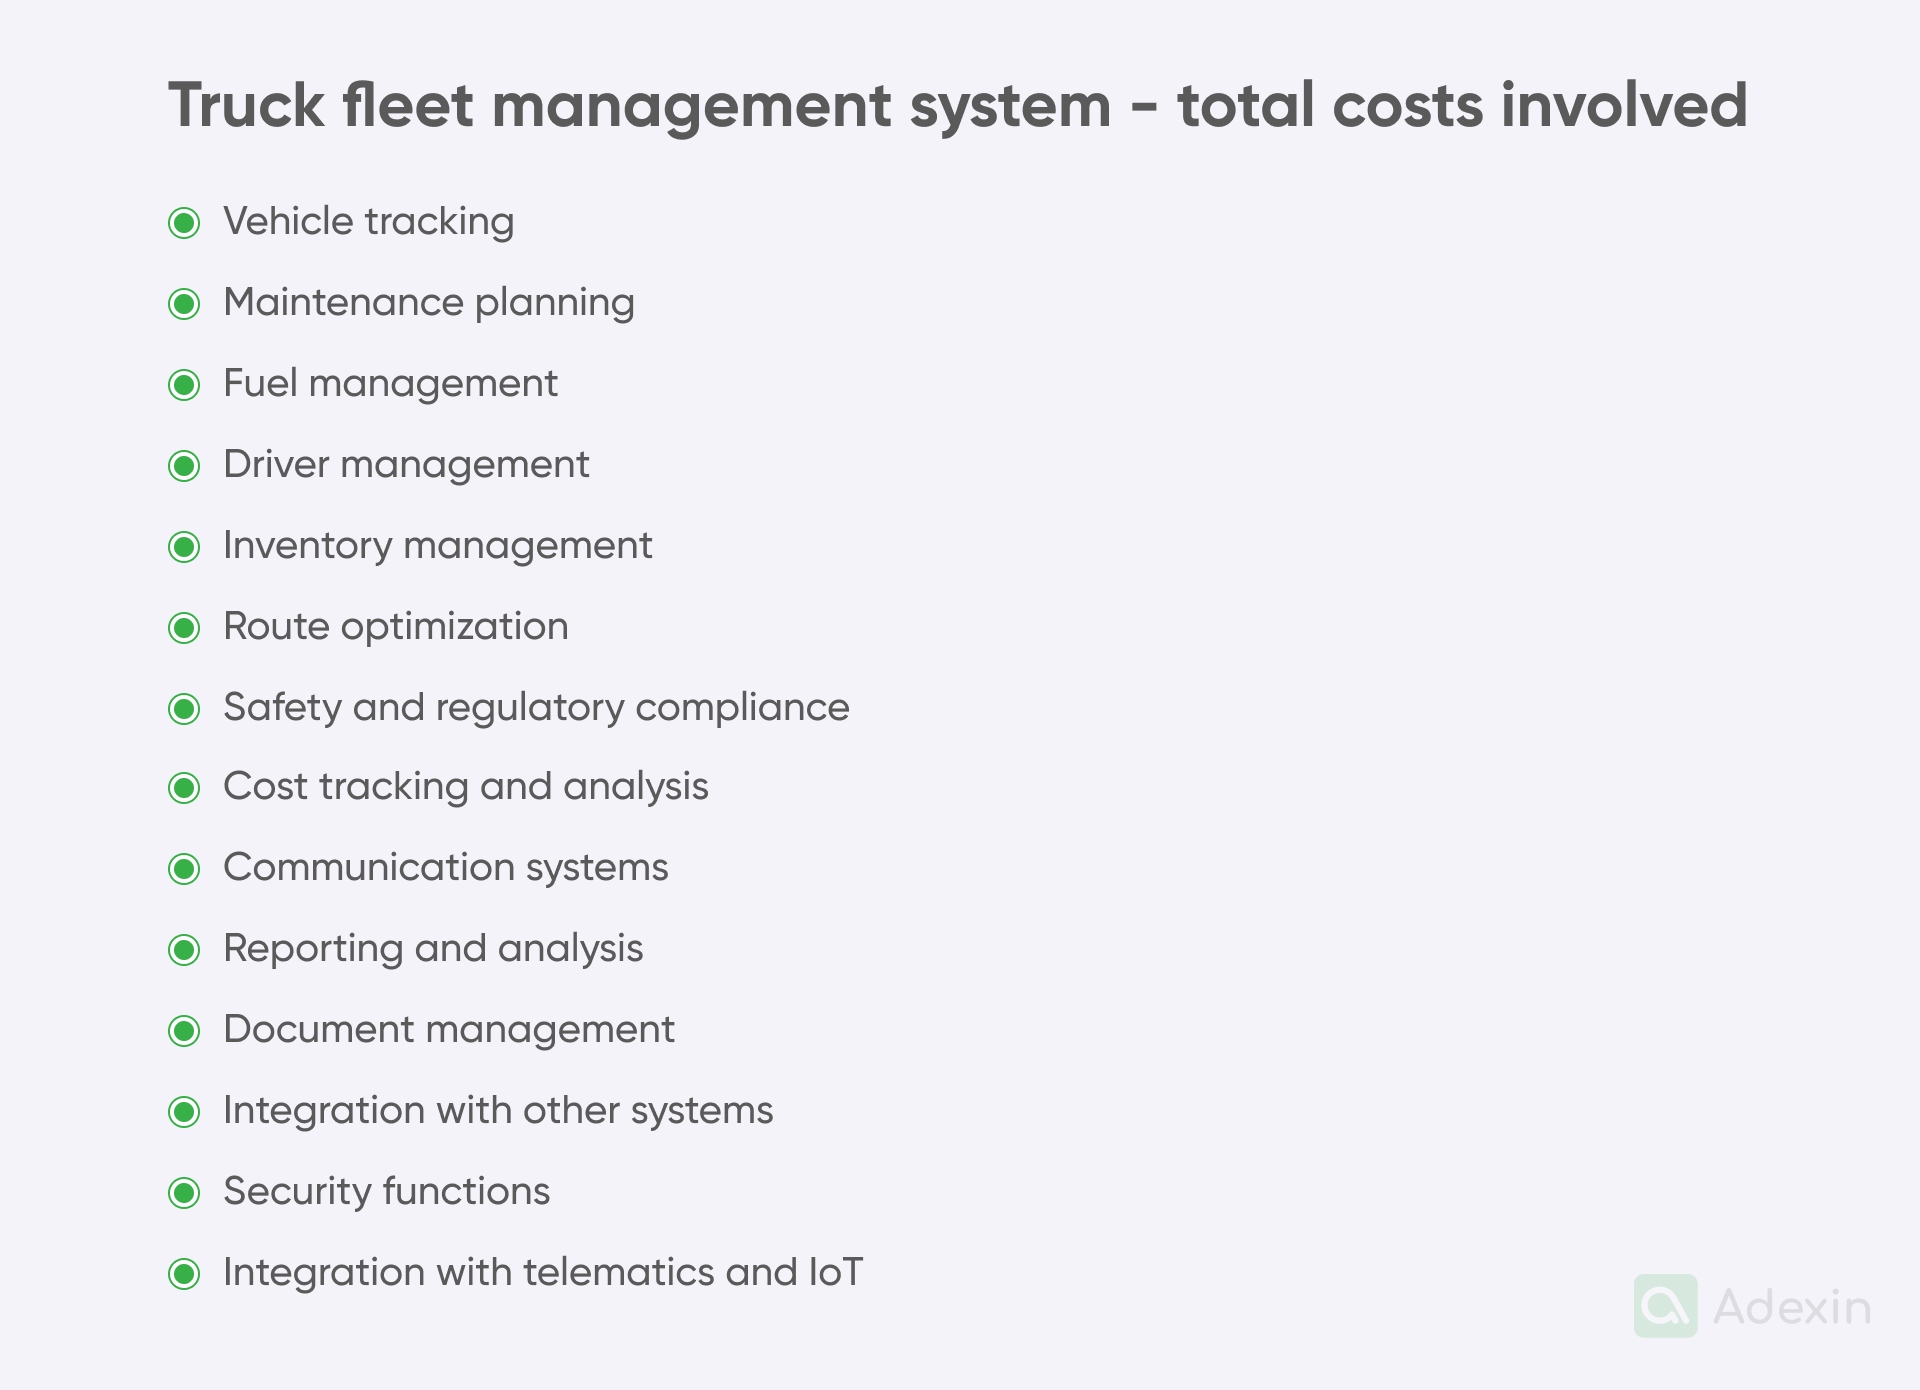 Elements of truck fleet management system costs